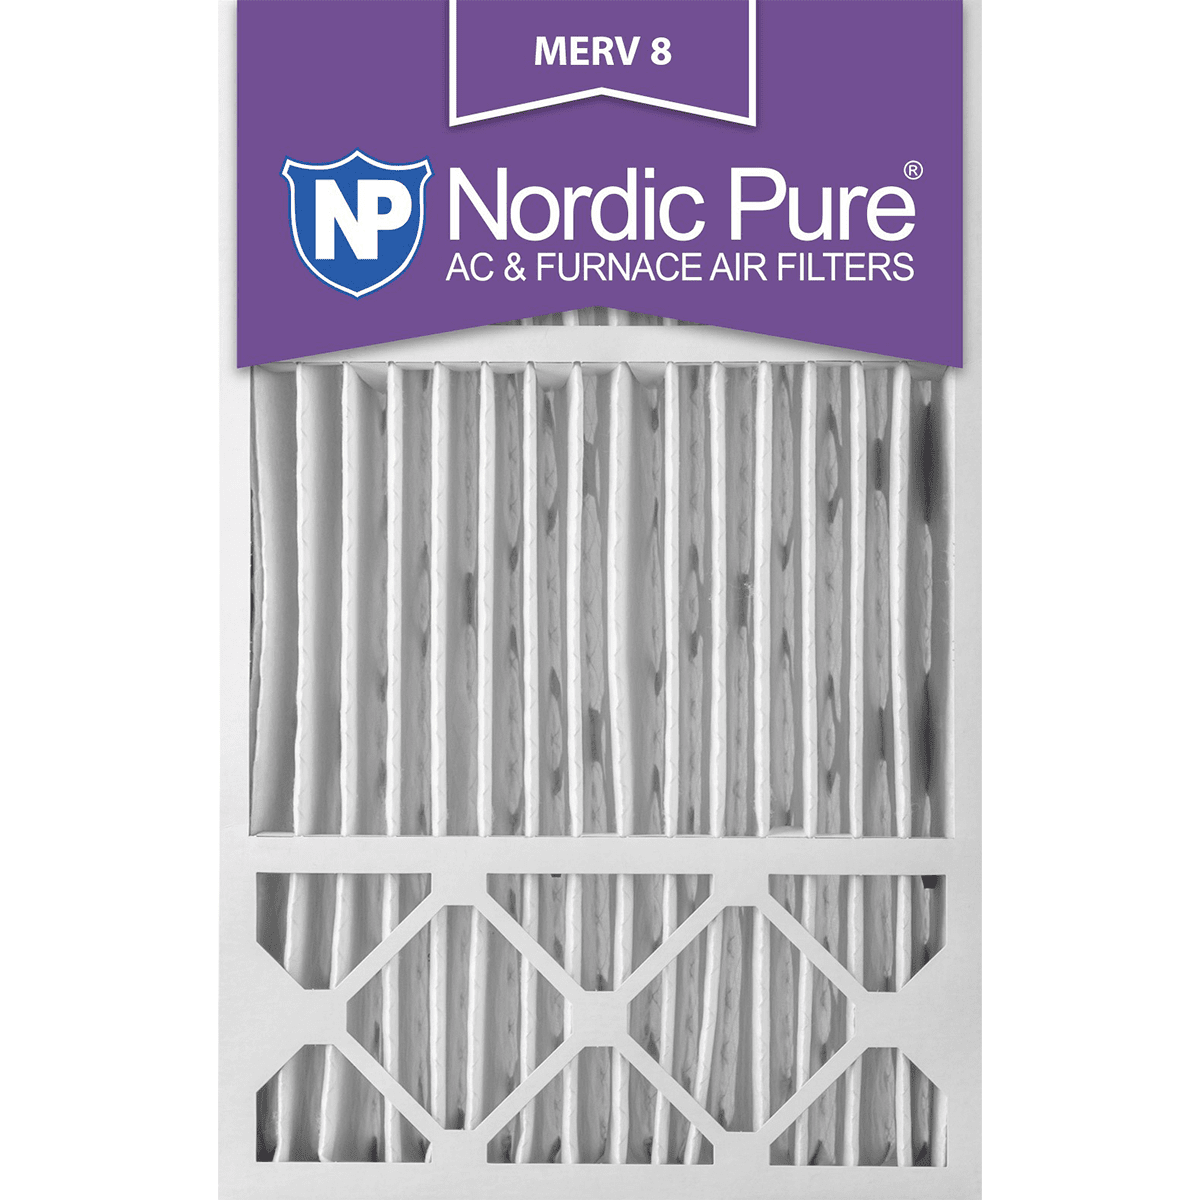 Nordic Pure Merv 8 Pleated Furnace Filter 16x25x5 (16x25x5hm8-1)